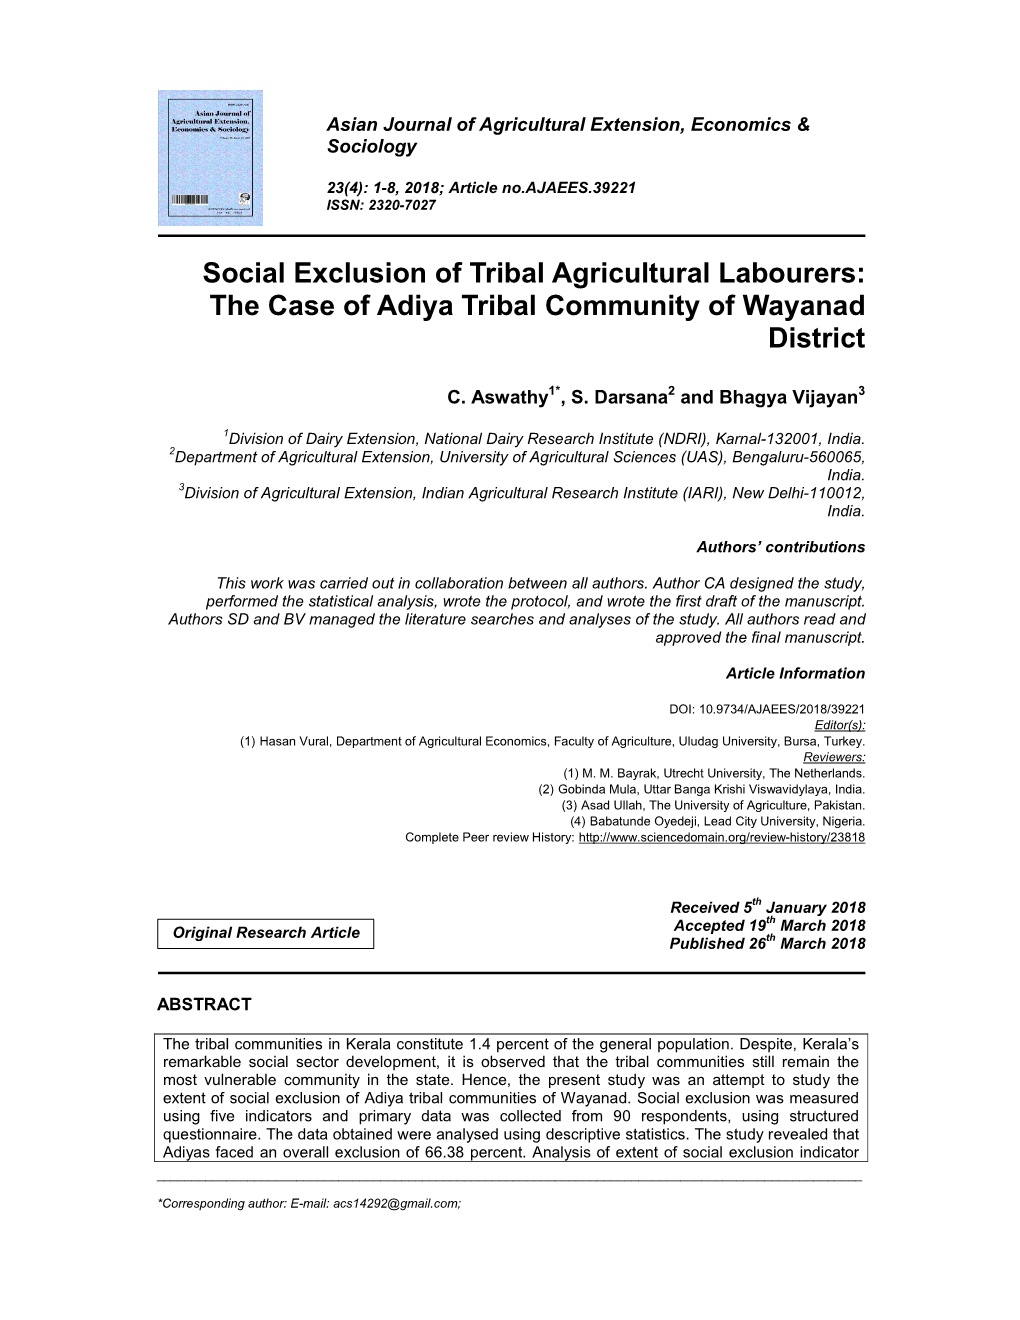 The Case of Adiya Tribal Community of Wayanad District